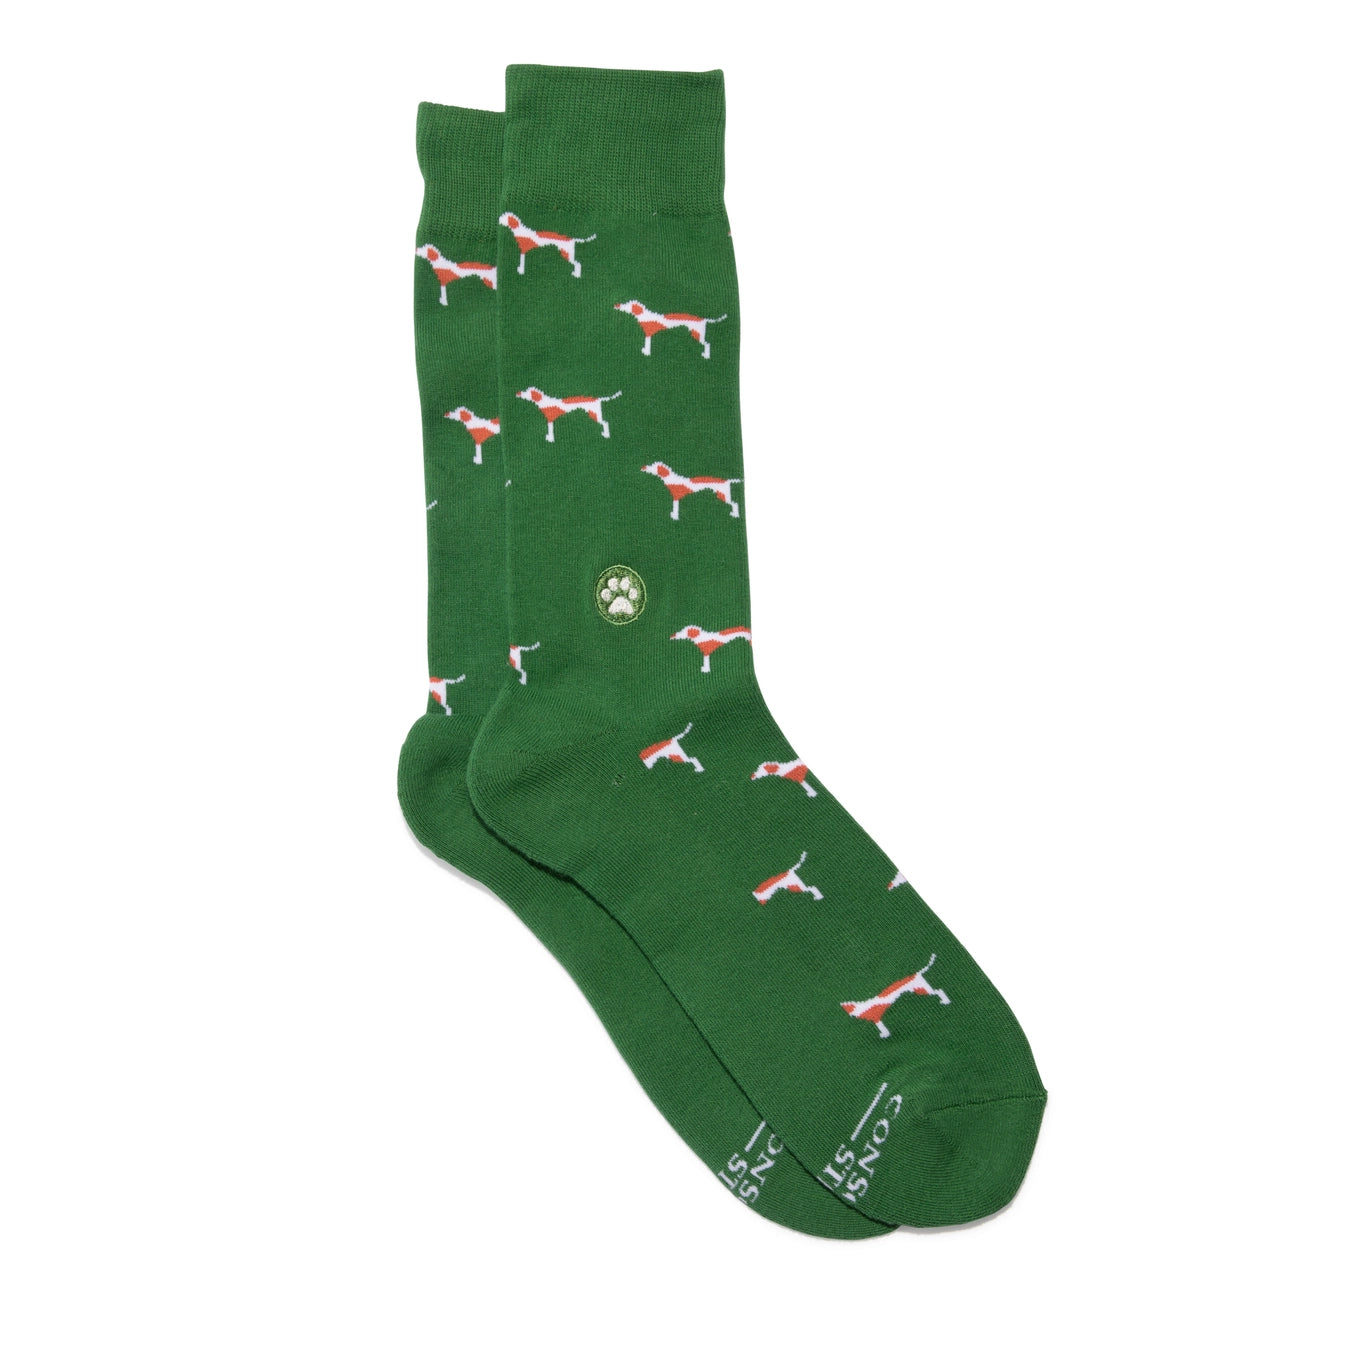 Socks - Save Dogs (Green)